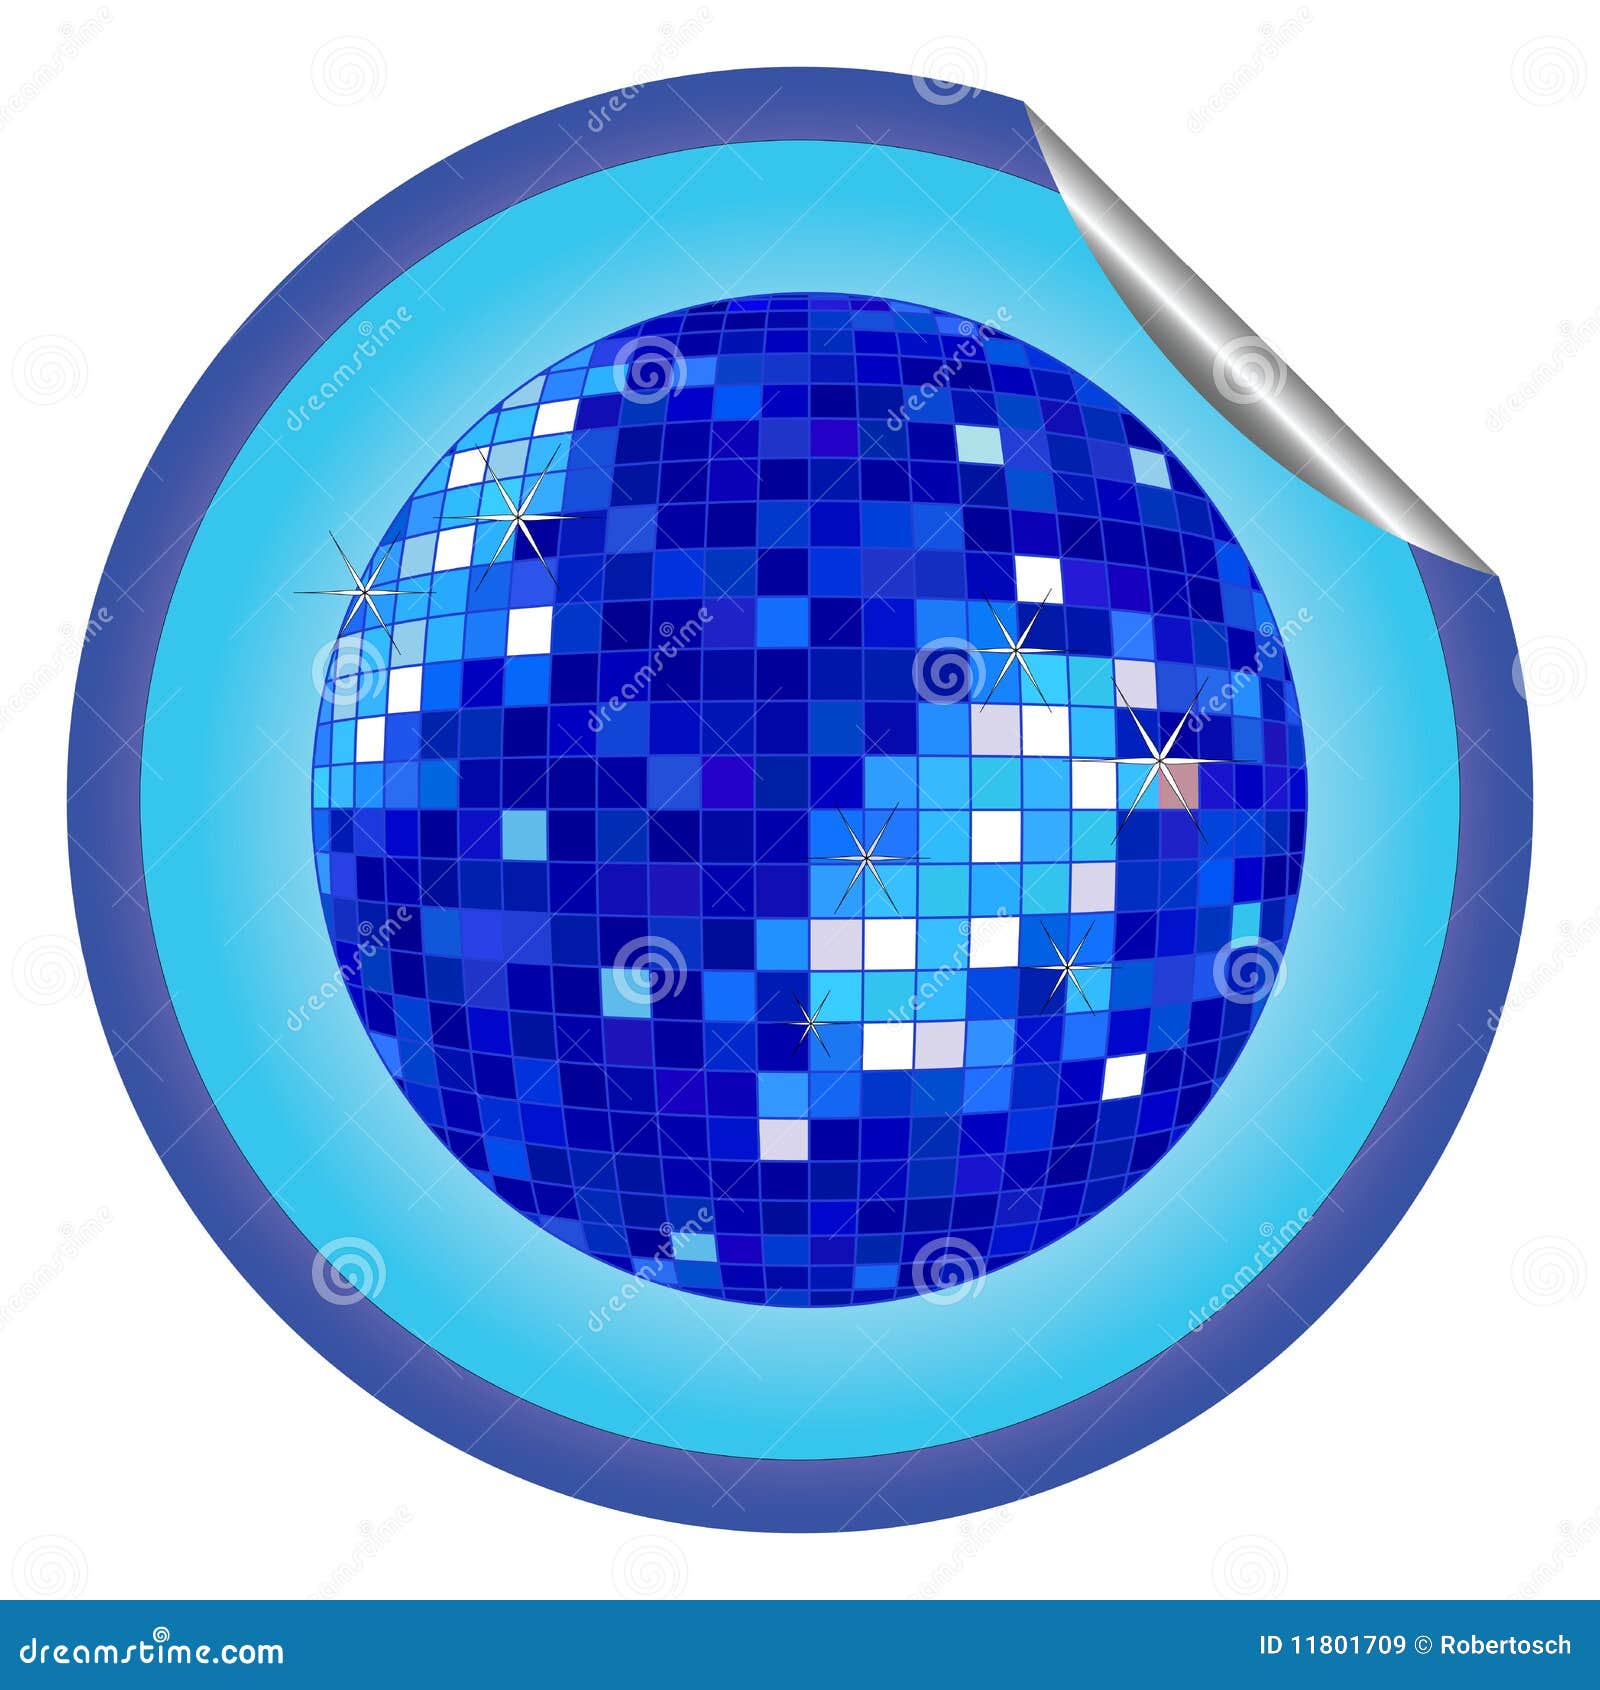 Sticker disco ball isolated on white 